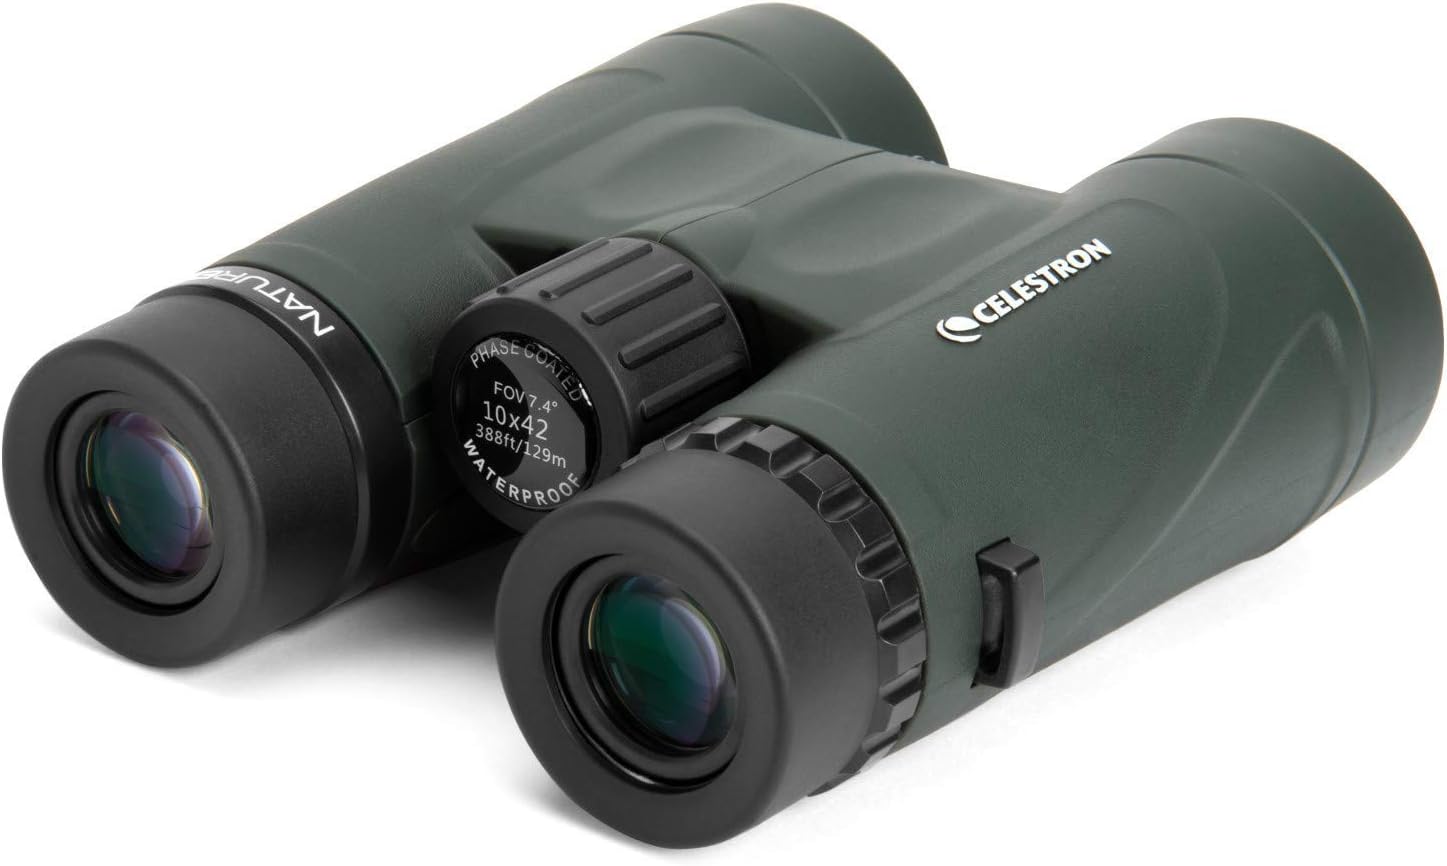 Celestron – Nature DX 10x42 Binoculars – Outdoor and Birding Binocular – Fully Multi-Coated with BaK-4 Prisms – Rubber Armored – Fog  Waterproof Binoculars – Top Pick Optics